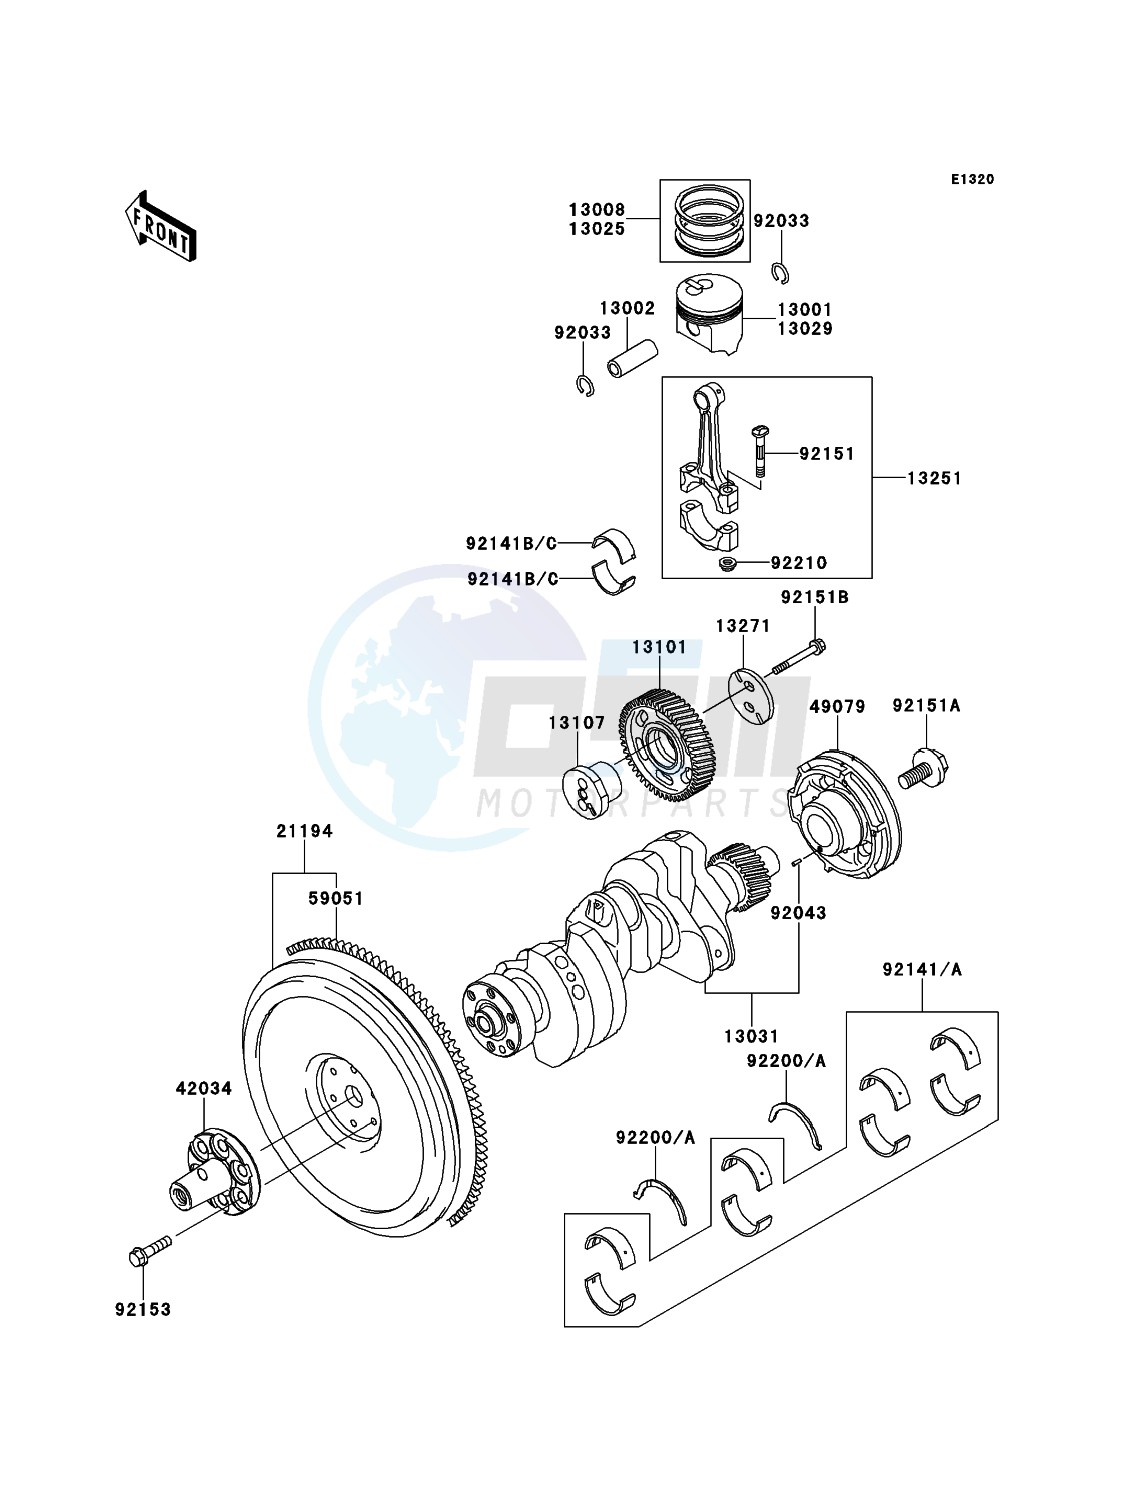 Crankshaft/Piston(s) blueprint